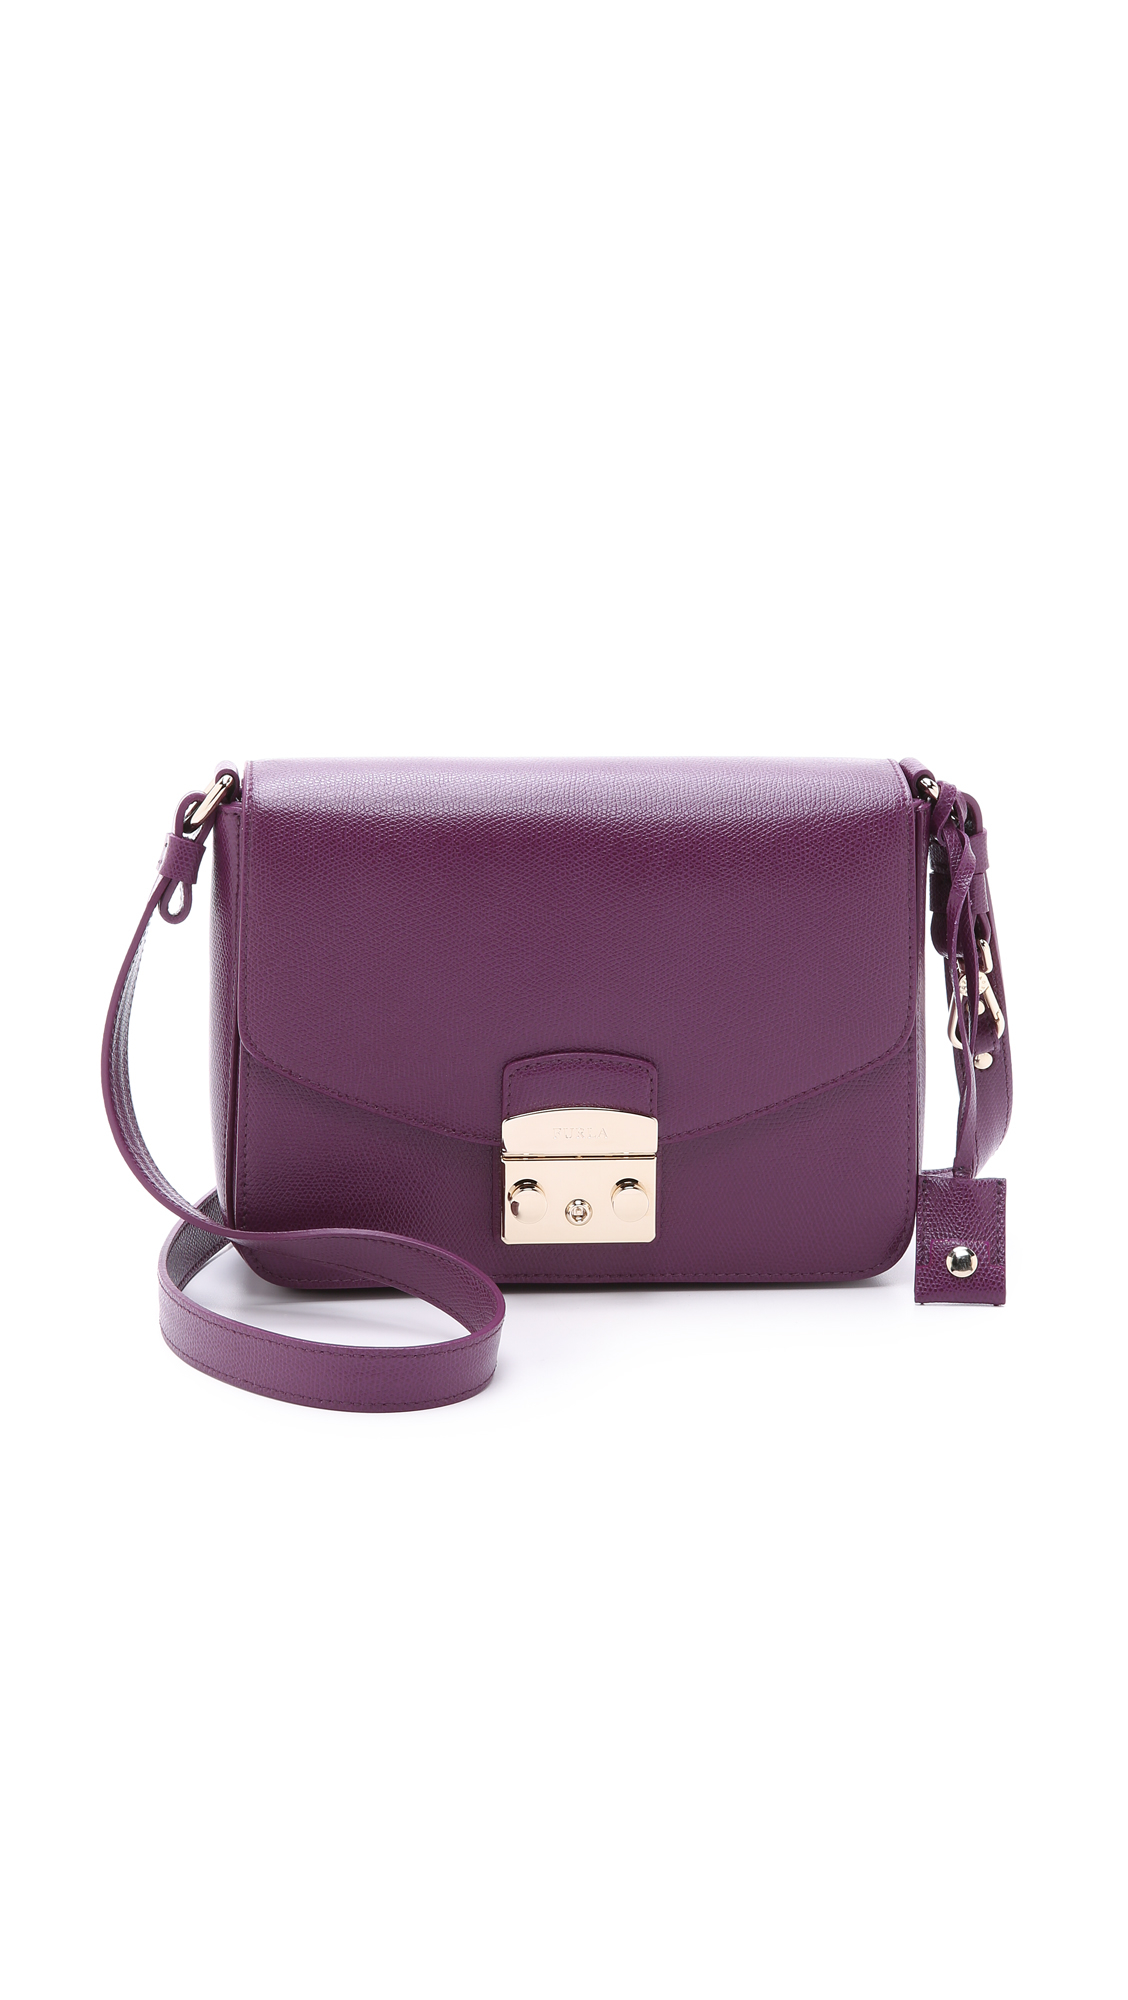 Furla Metropolis Shoulder Bag - Aubergine in Purple - Lyst